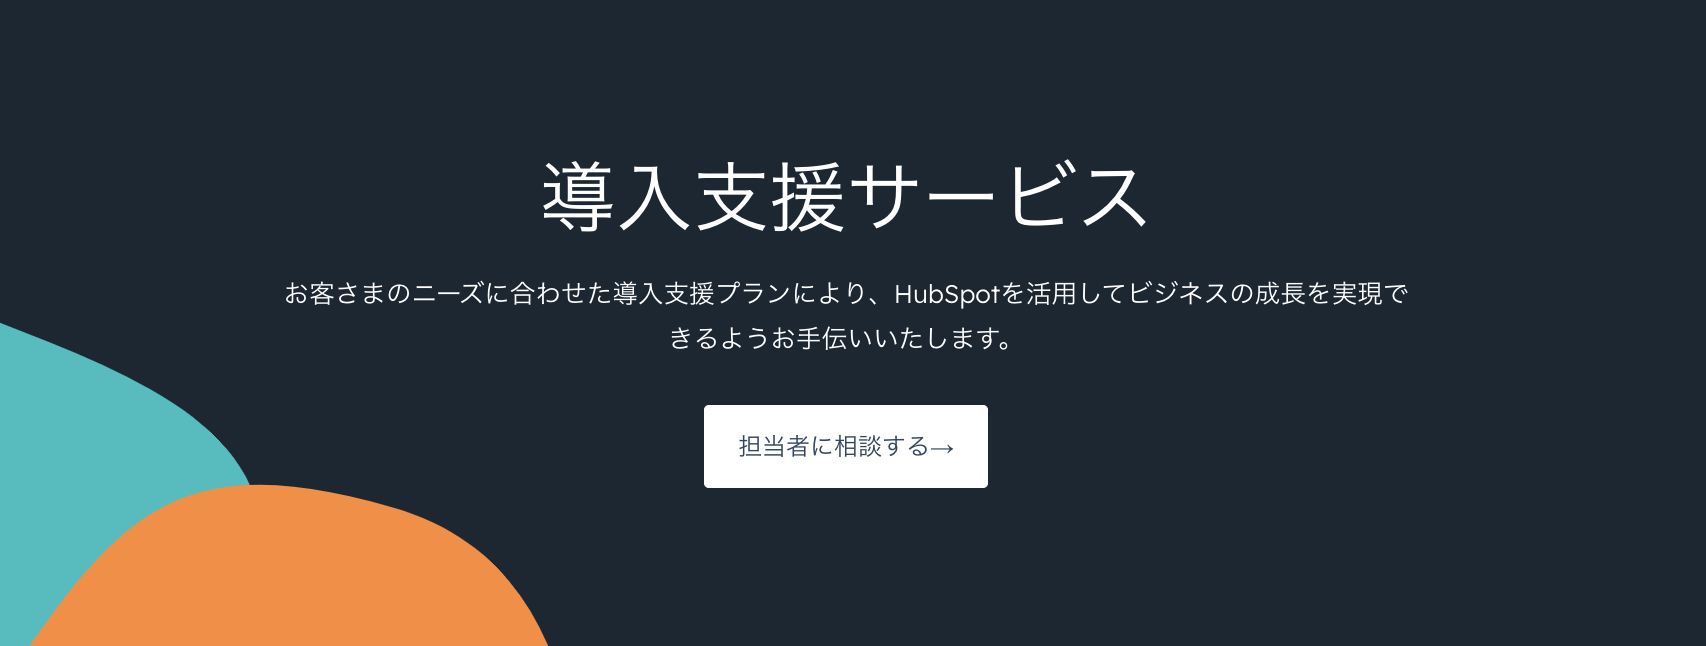 HubSpot導入支援サービス